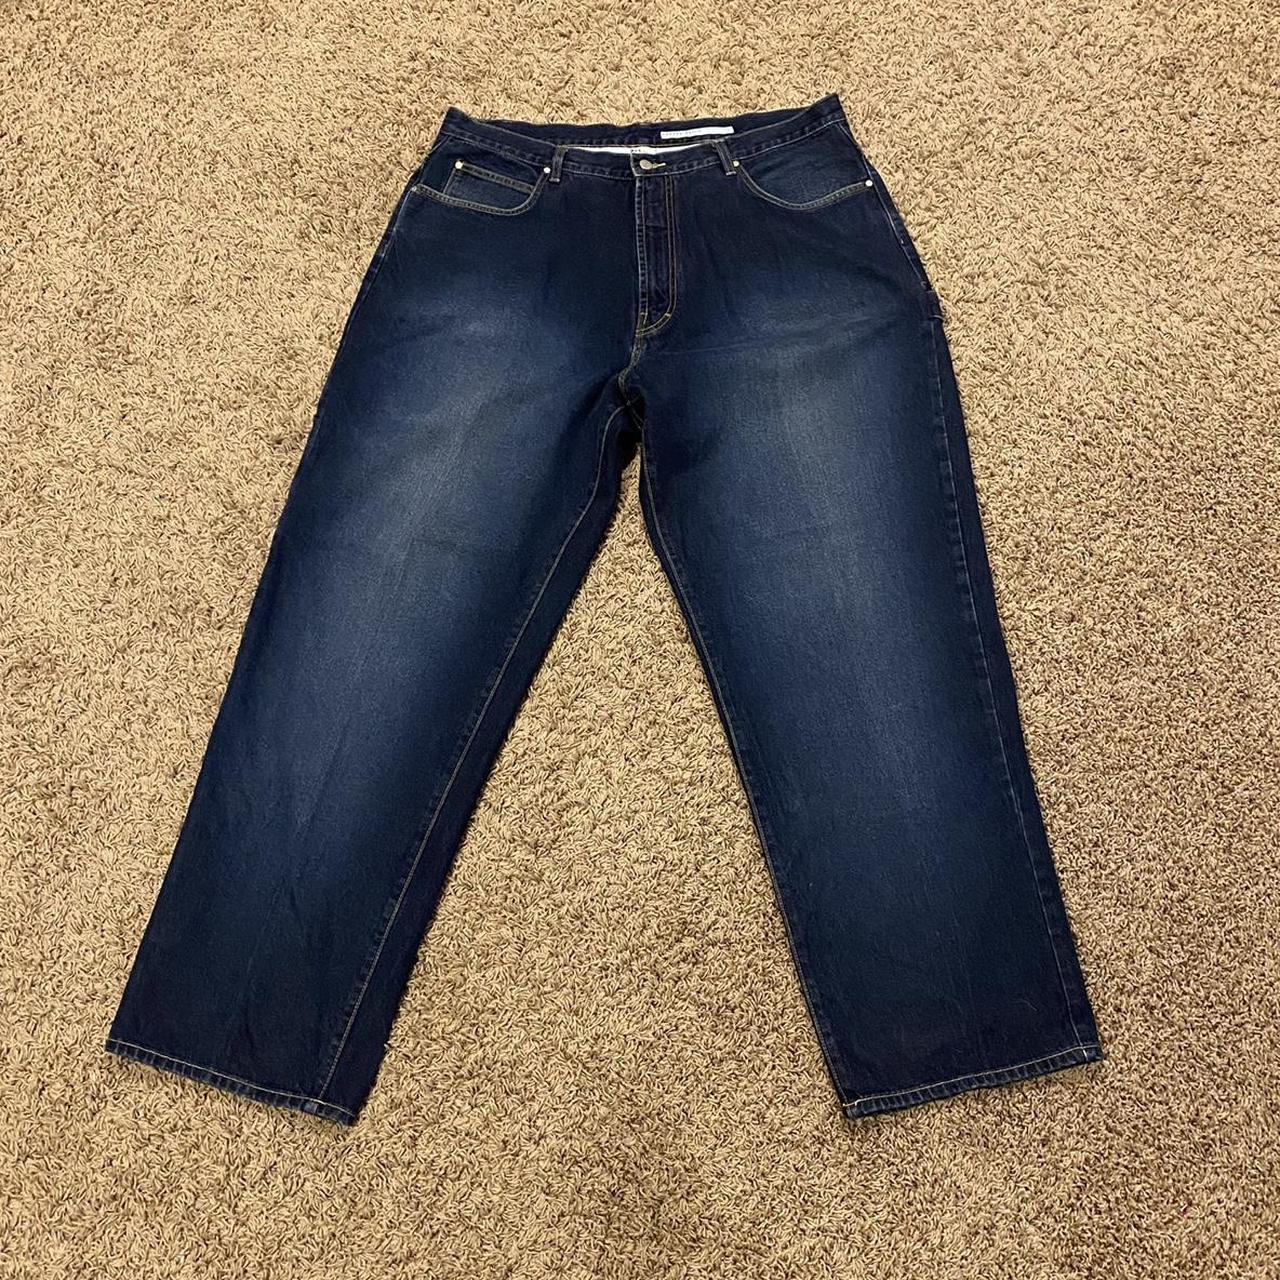 azzure denim baggy carpenter jeans - size 40/34 -... - Depop